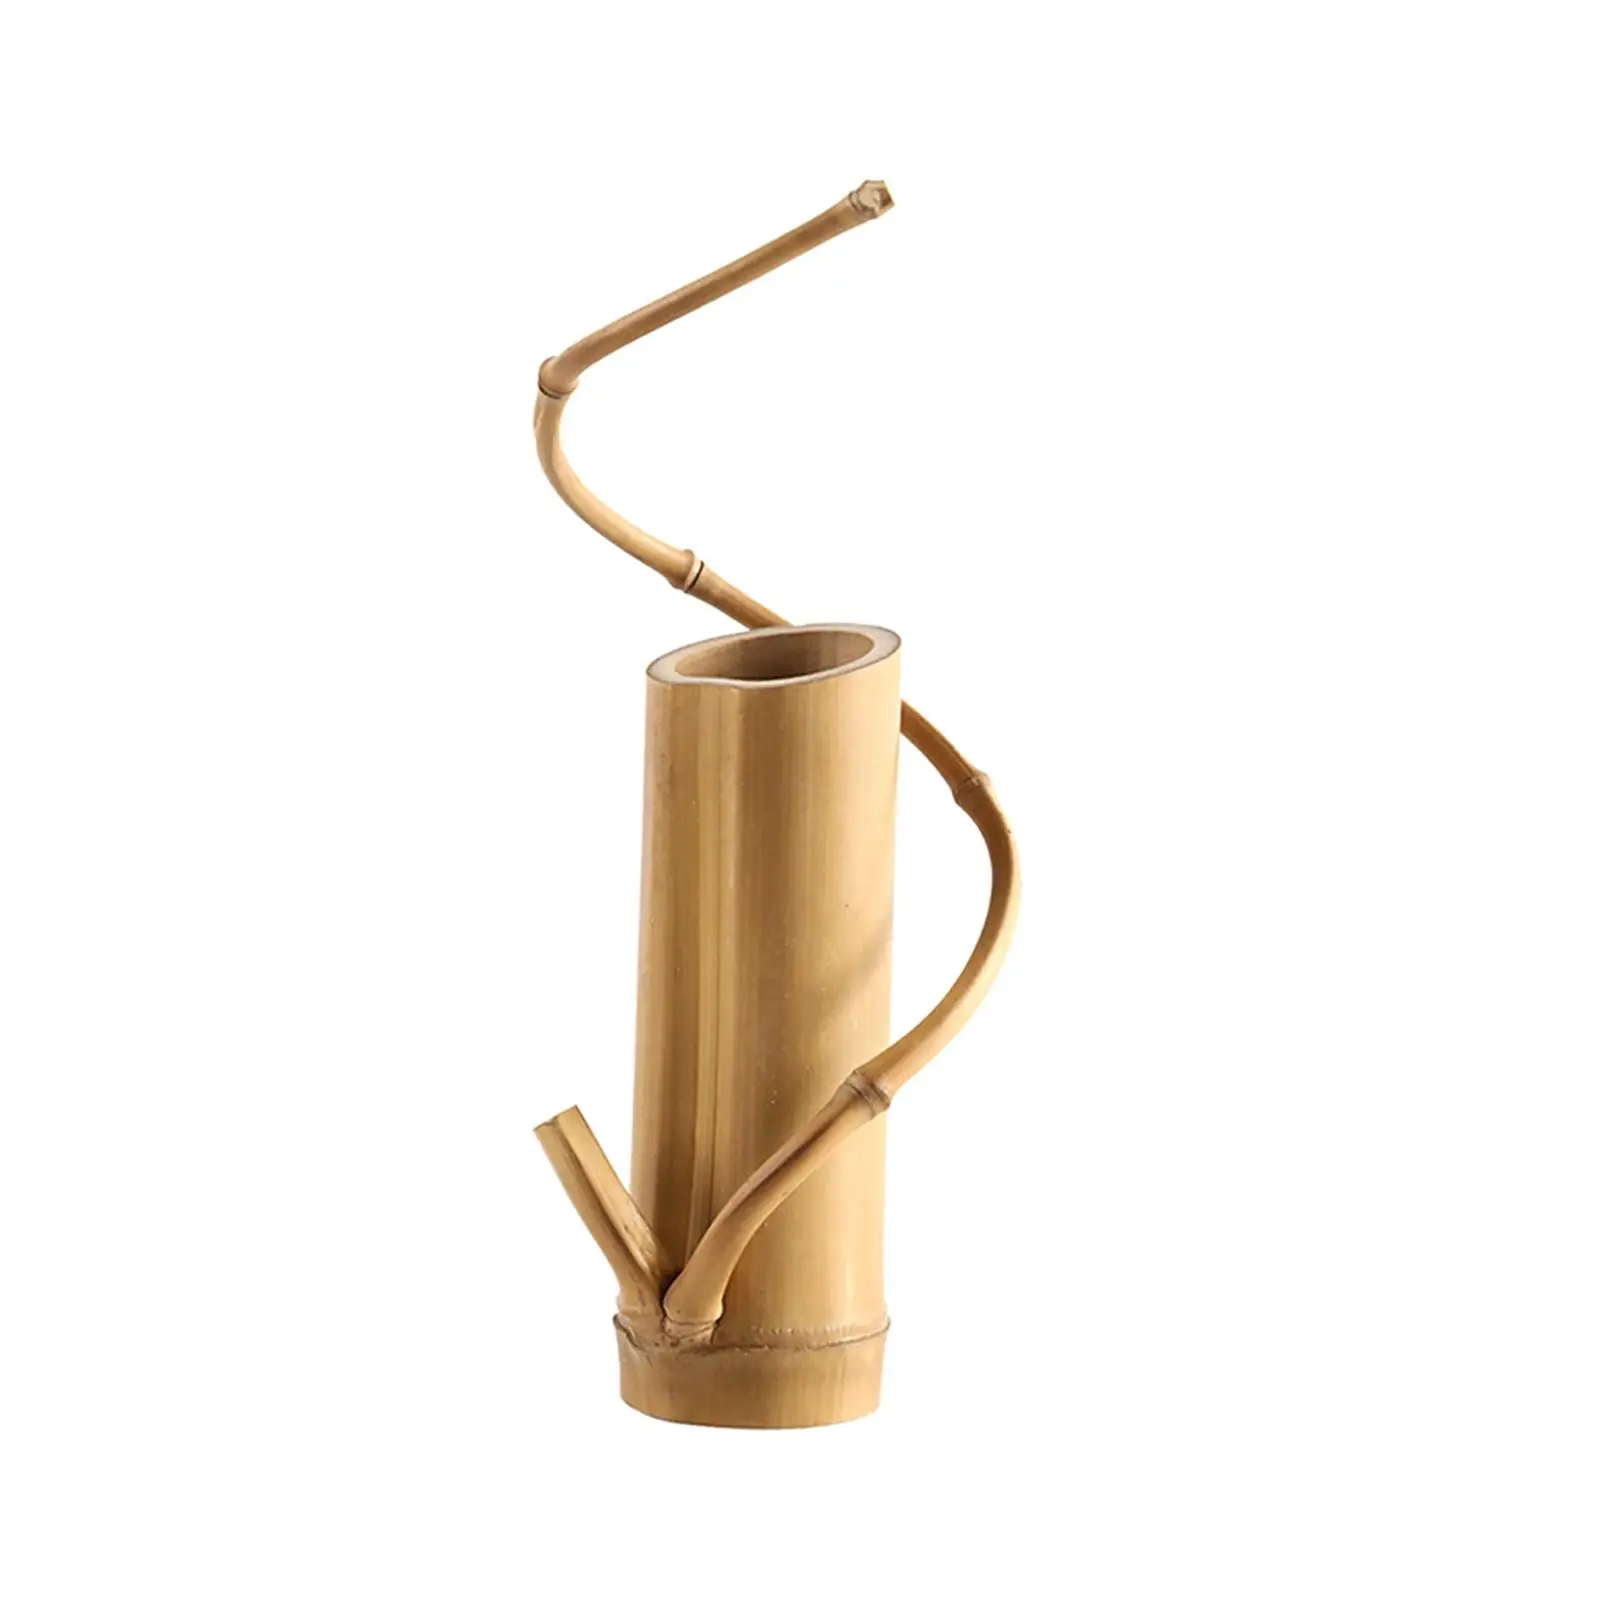 Bamboo Vase Decorative Table Ornament Handmade for Housewarming Gift Stylish